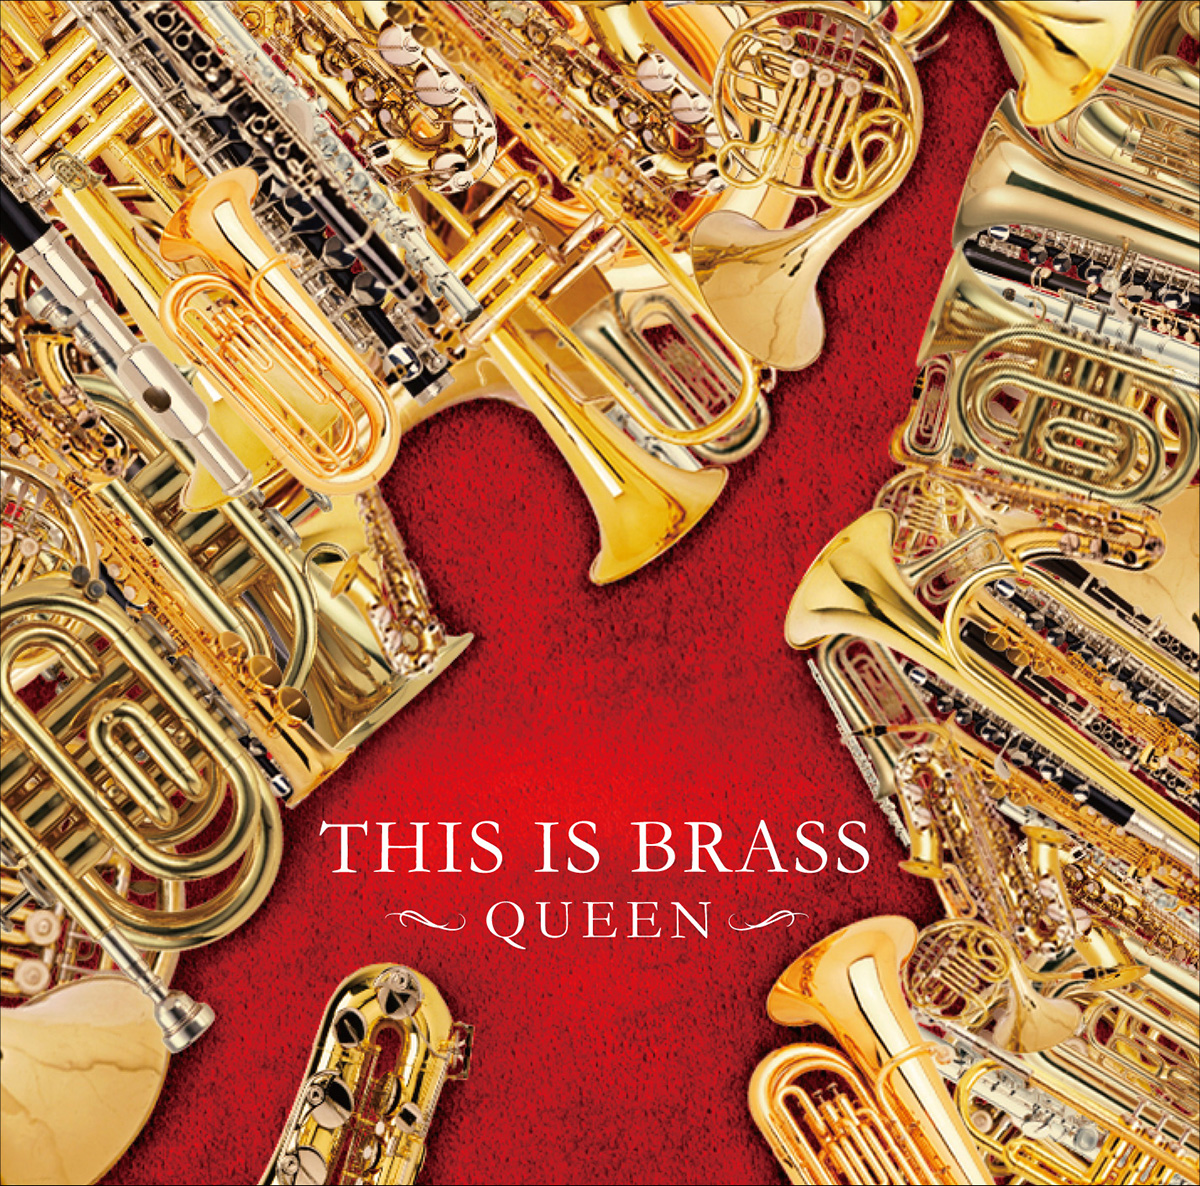 Queen の美しき音楽世界を吹奏楽でカバー This Is Brass ブラバン Queen 発売 ユニバーサル ミュージック合同会社のプレスリリース